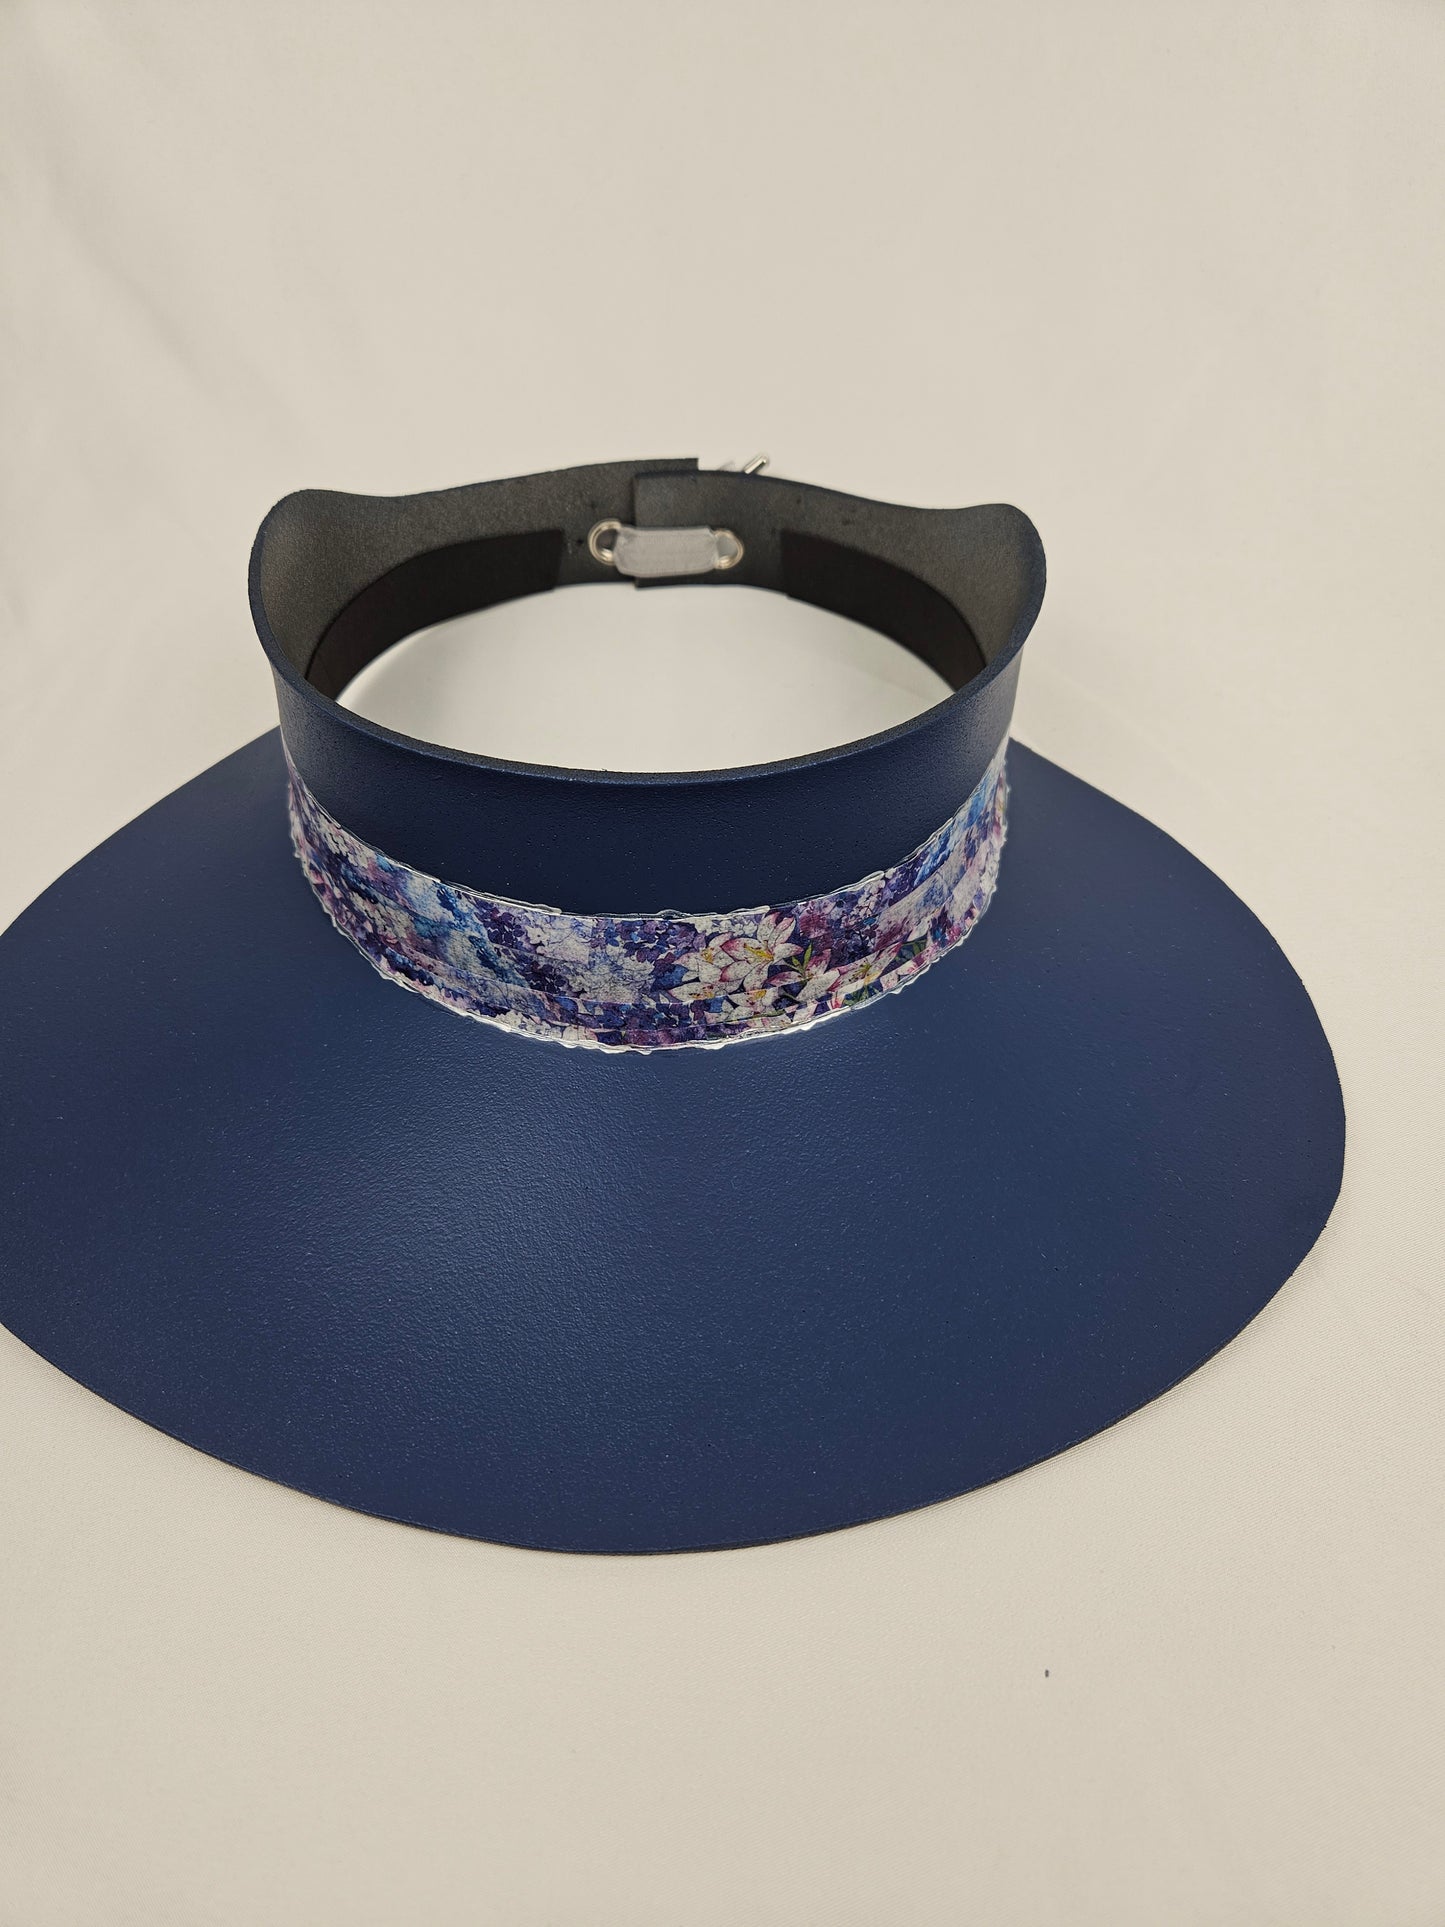 Classic Navy Audrey Foam Sun Visor Hat with Blue and Purple Floral Band: Big Brim, Golf, Swim, UV Resistant, No Headache